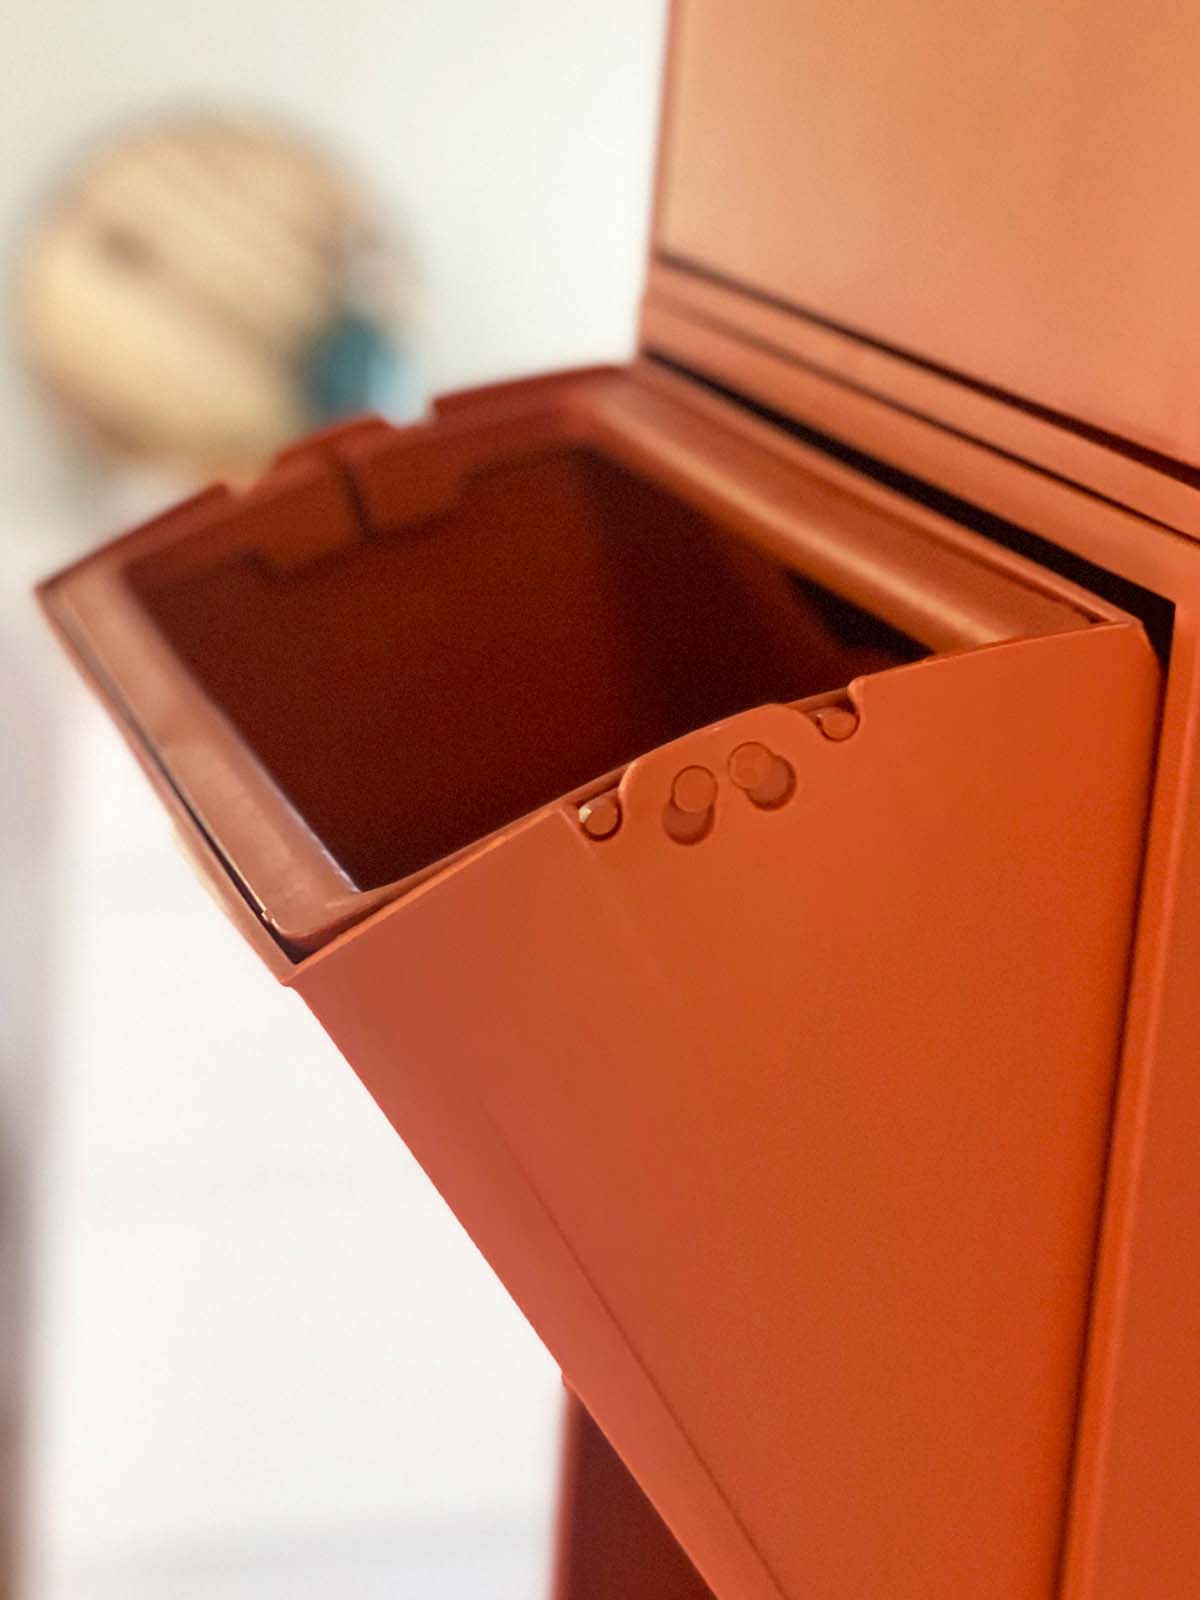 Recycling box i orange H40x15x30cm